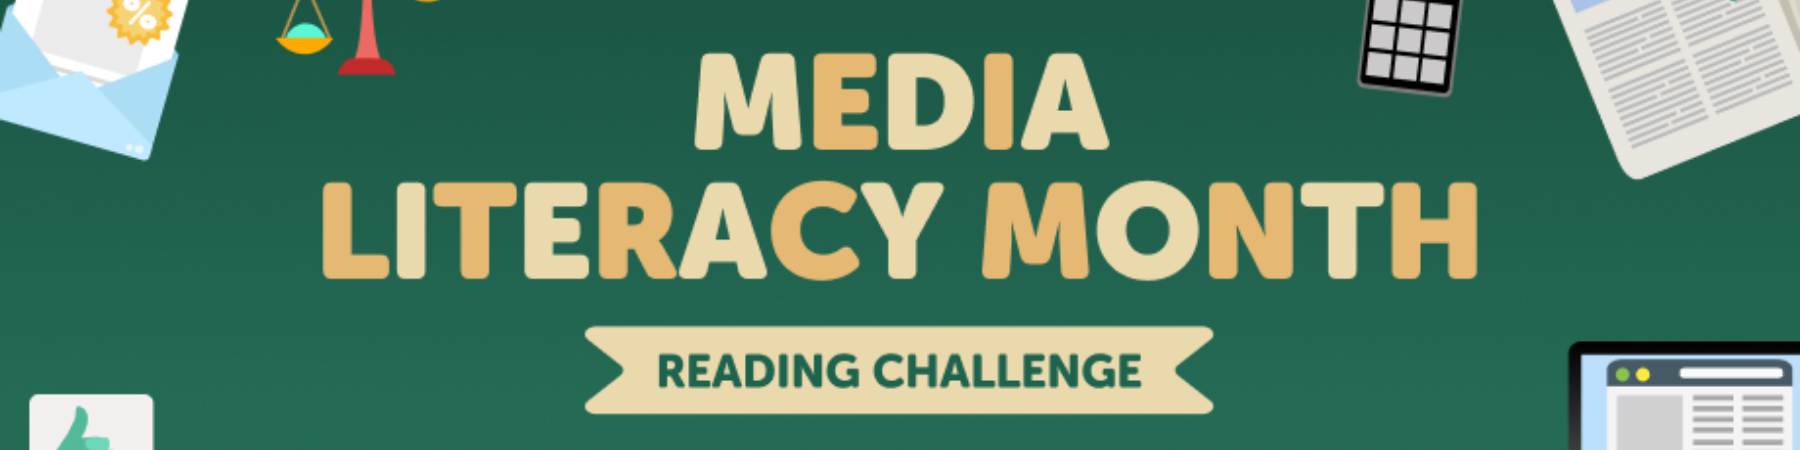 Media Literacy Month image